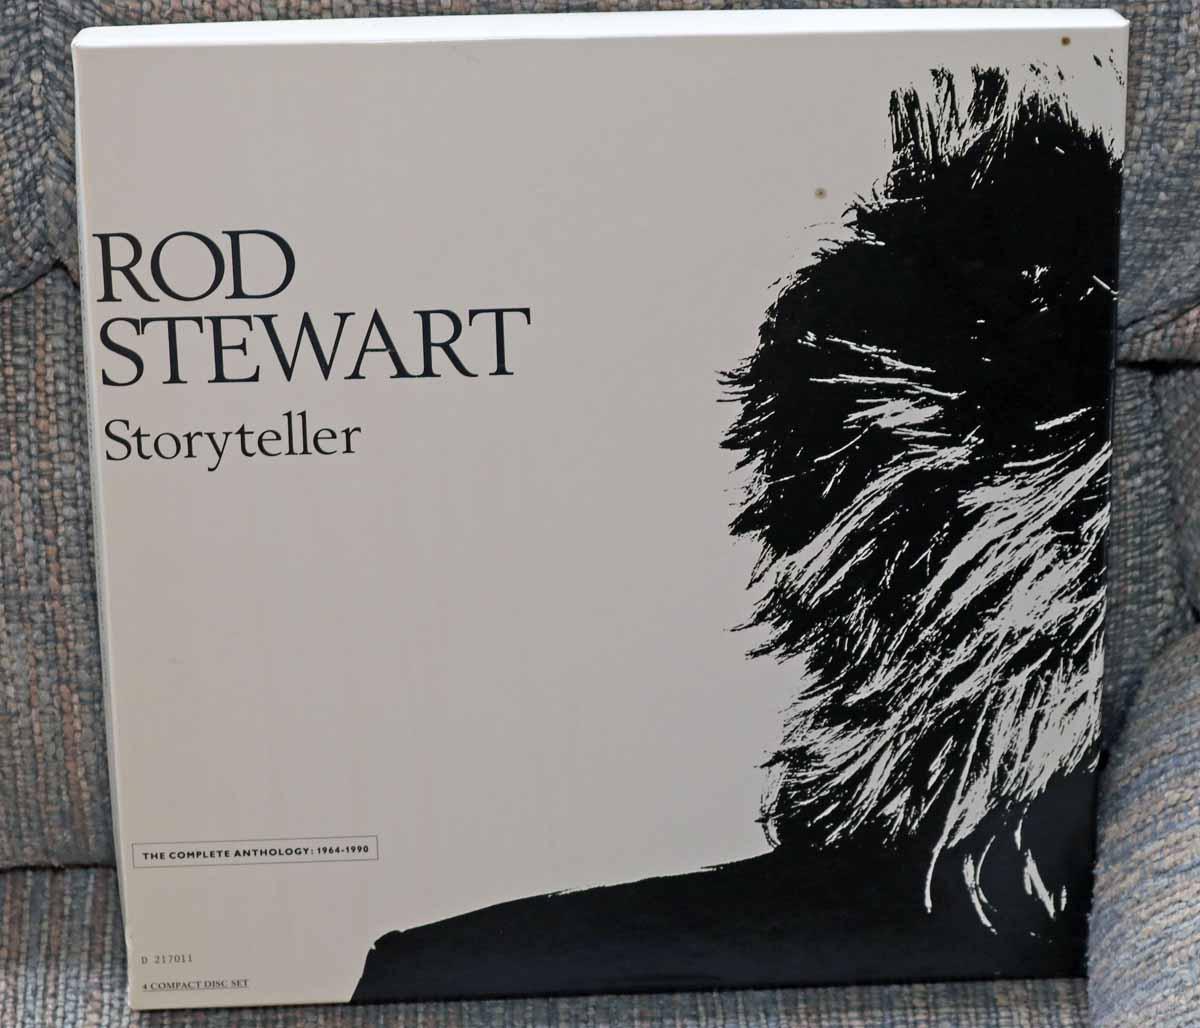 Rod Stewart Anthology "Storyteller" Boxed CD Set